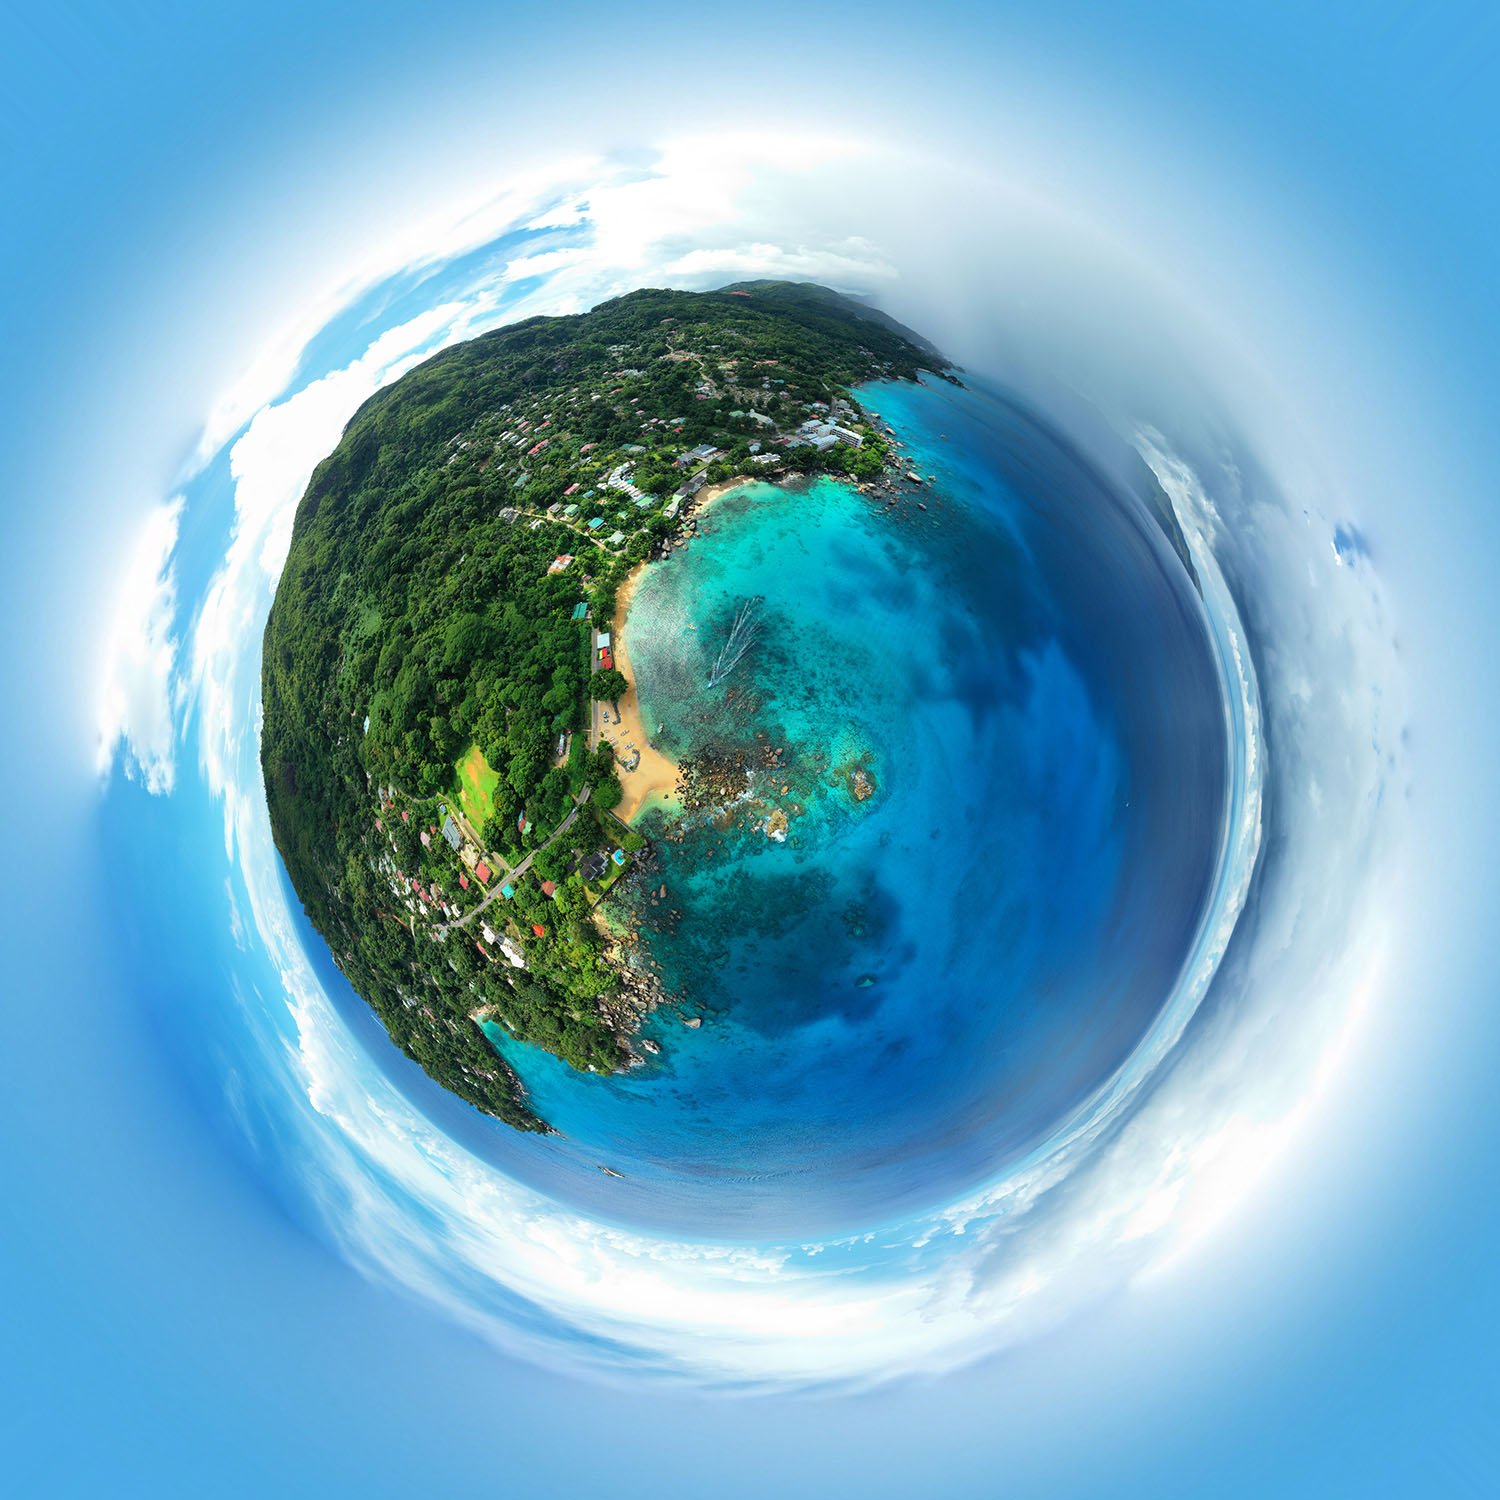 #360 панорама, #Индийский океан, #остров, #шар, #сфера #copter #drone #коптер #дрон, Борис Резванцев